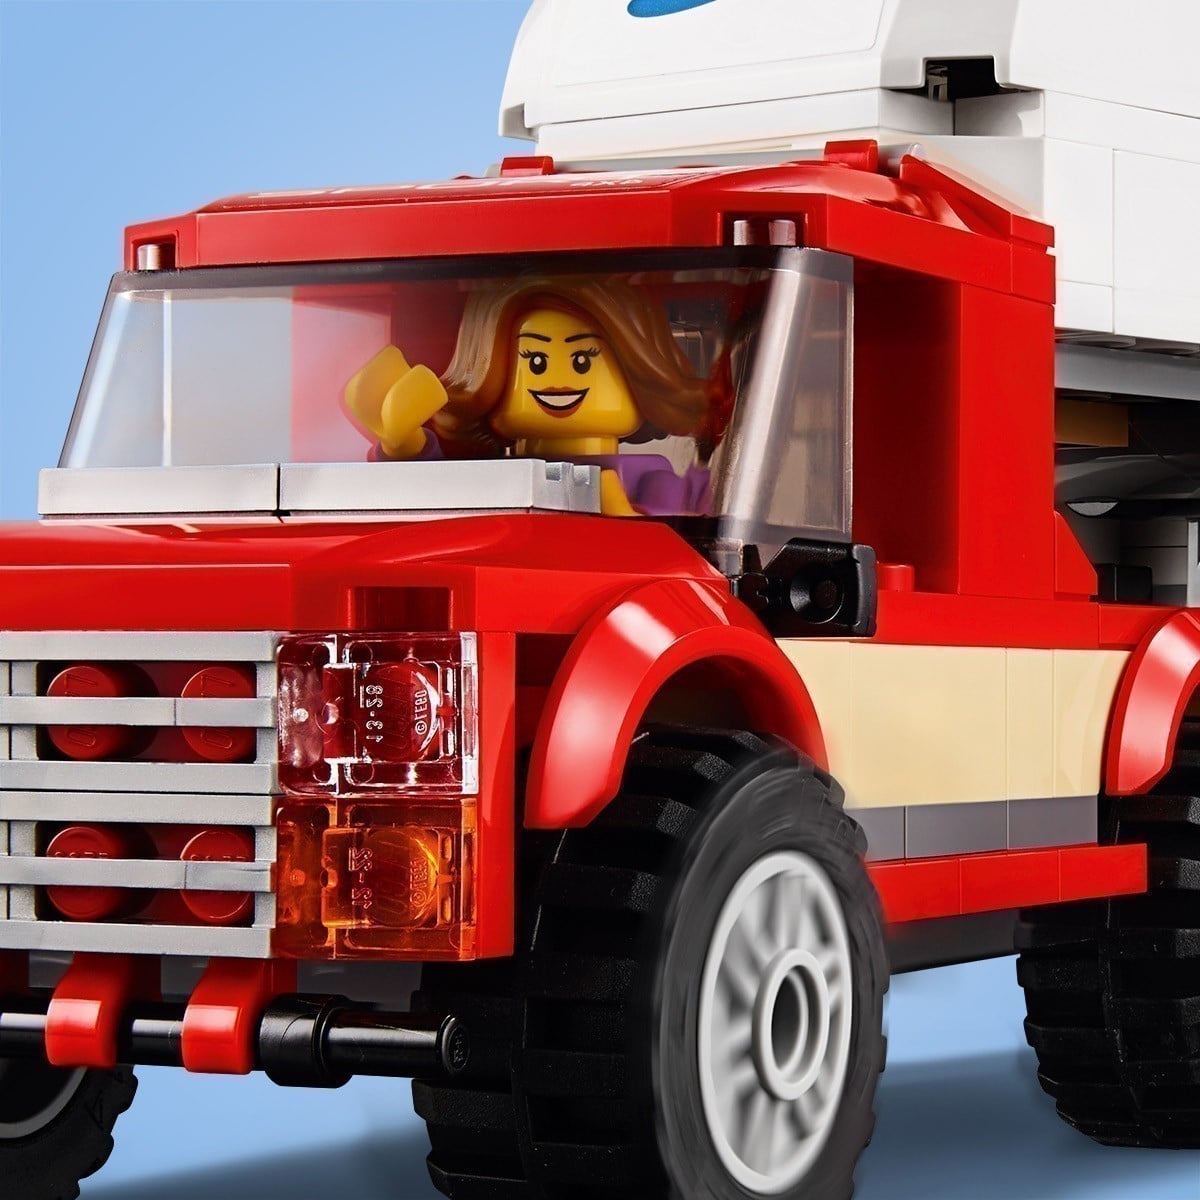 LEGO® City - 60182 Pickup & Caravan